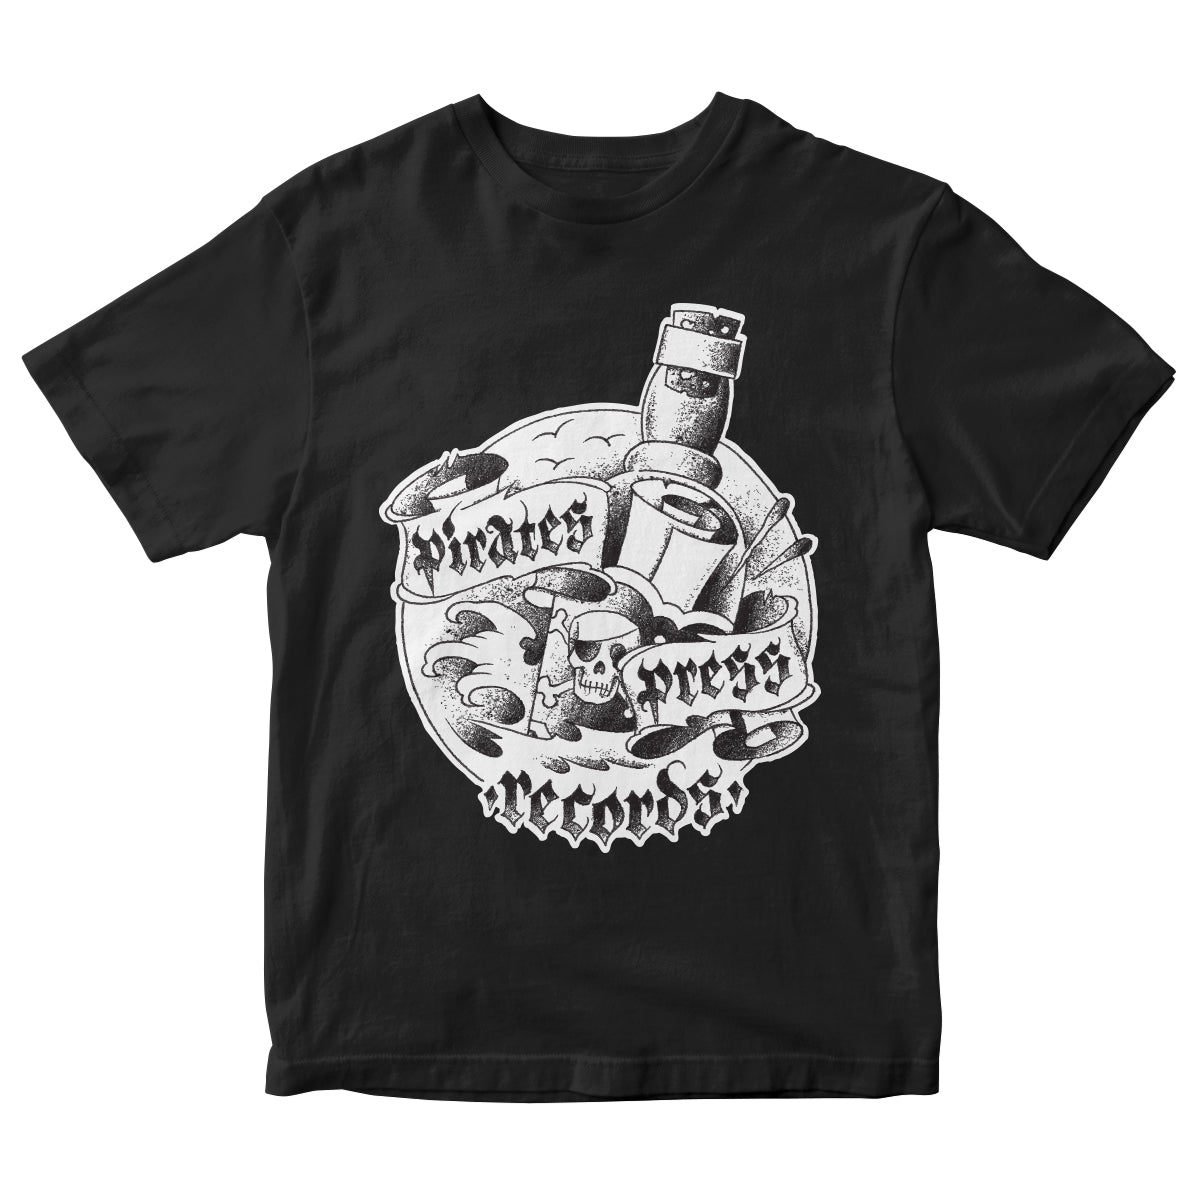 Pirates Press Records - Bottle - White on Black - T-Shirt